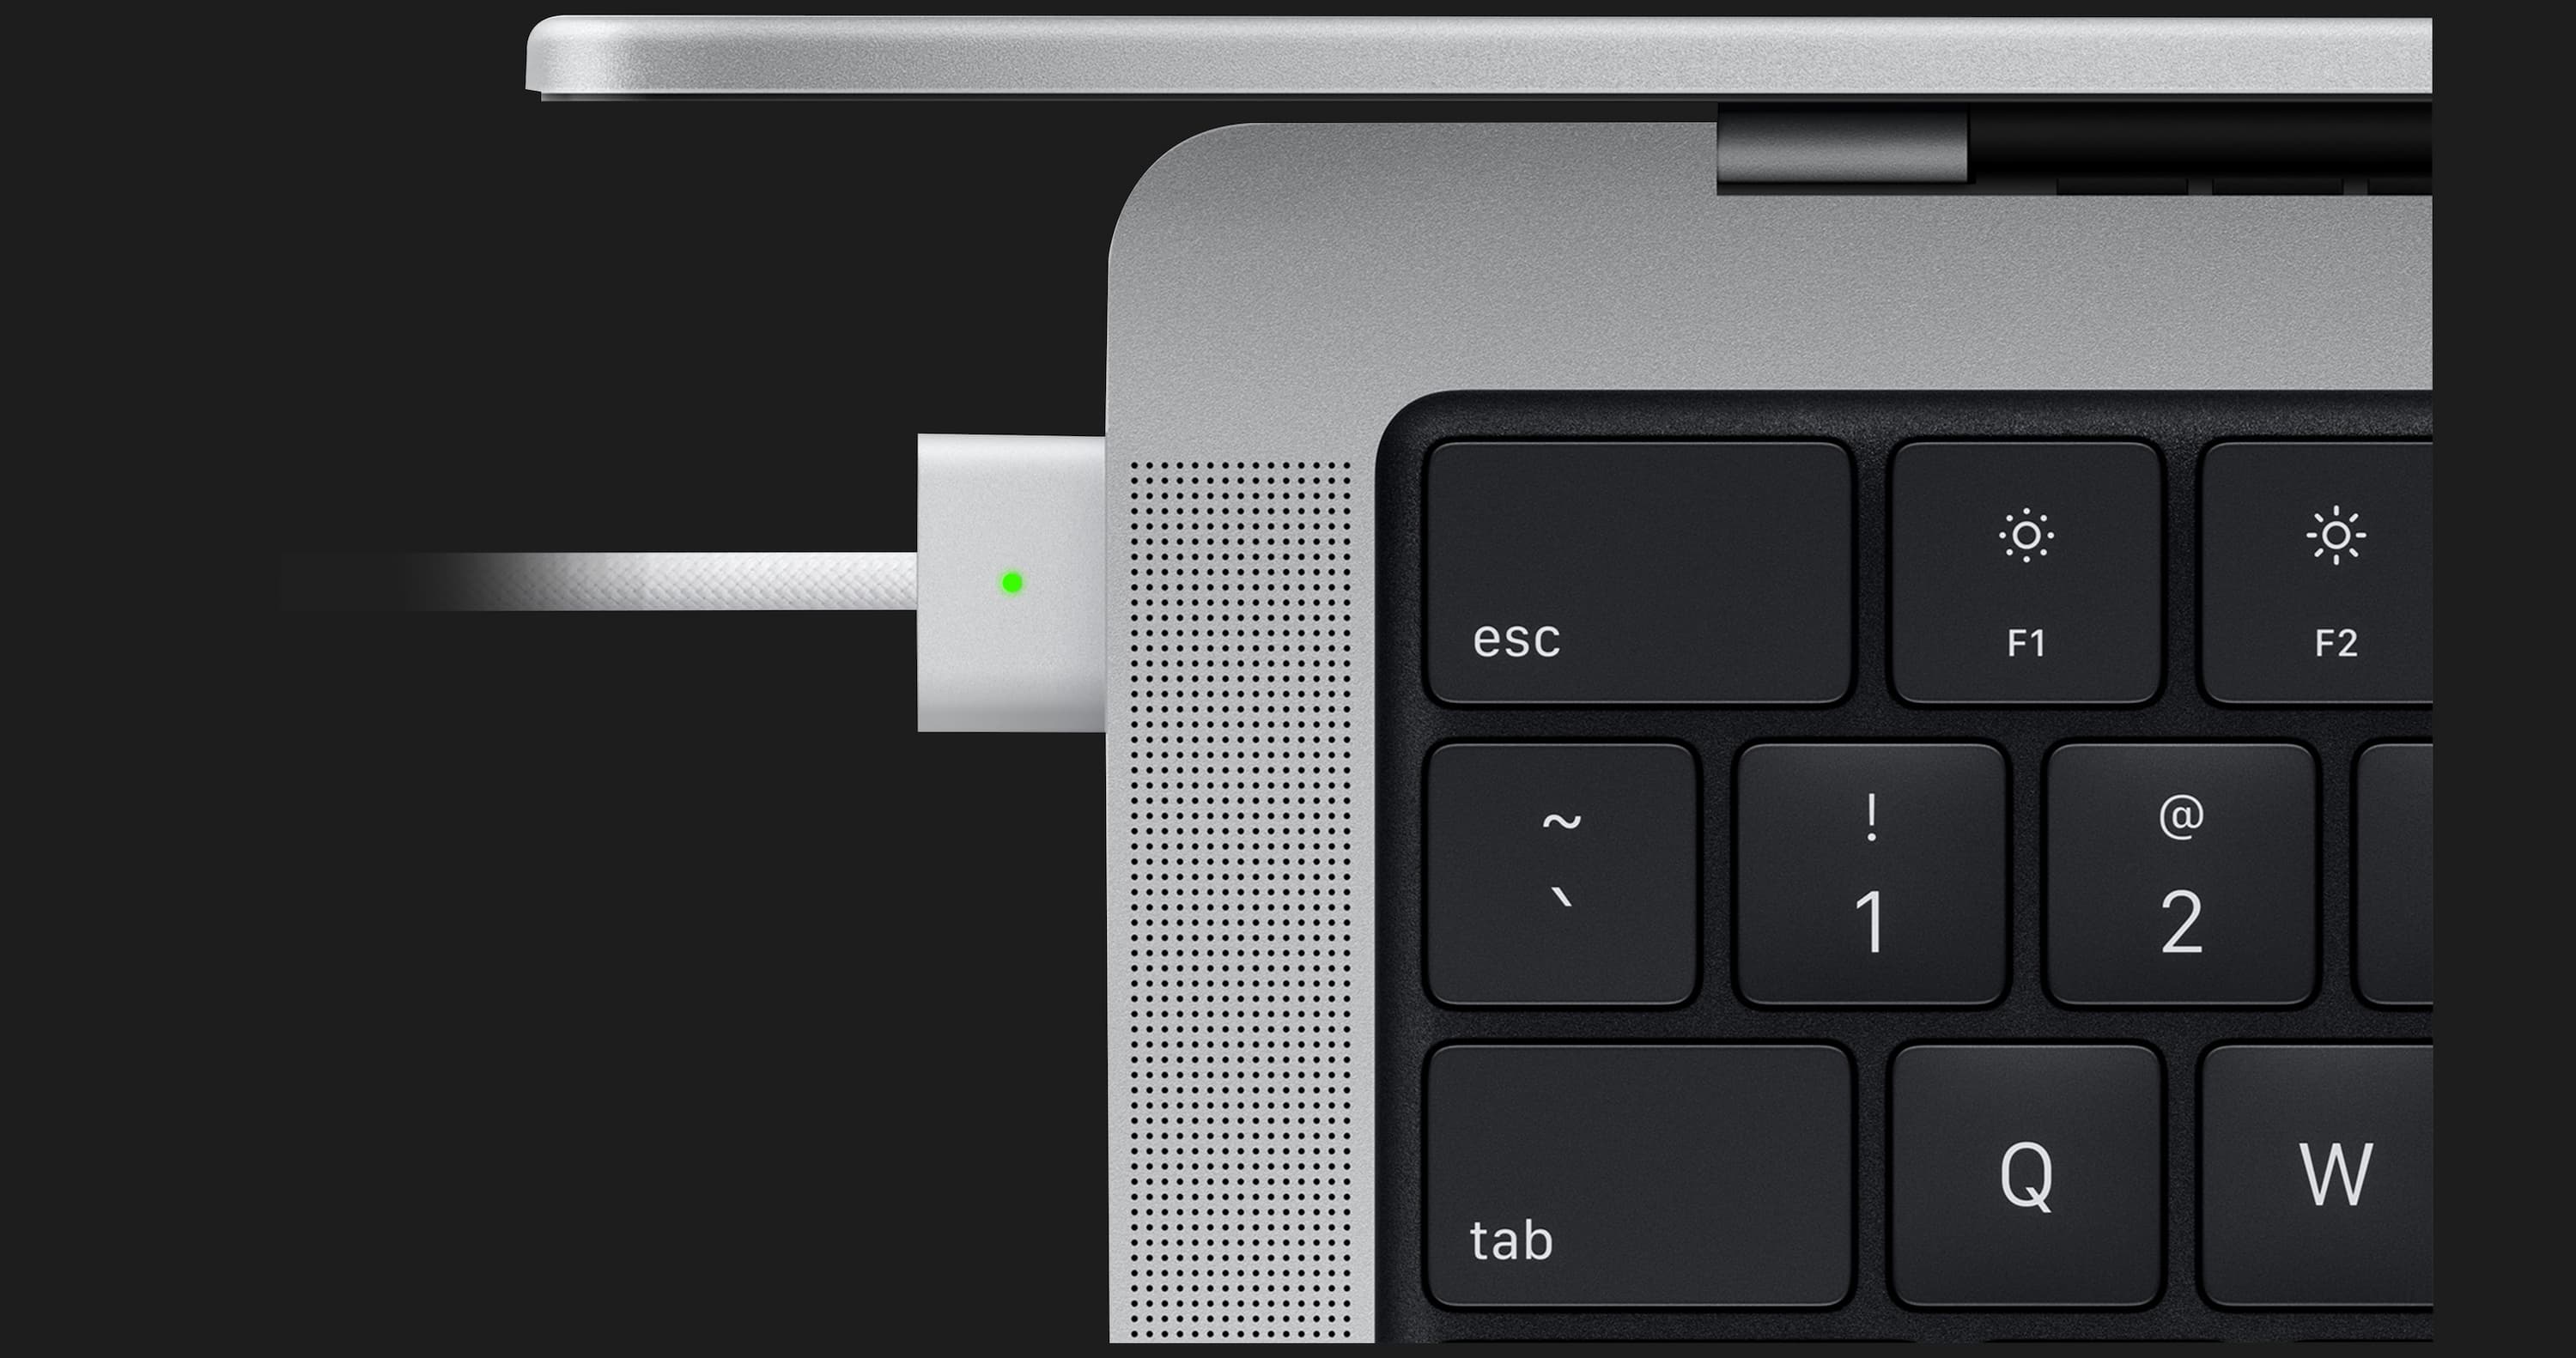 Apple MacBook Pro 14, 512GB, Space Gray with Apple M1 Pro (Z15G0021L, Z15G001WA, Z15G0002B) (2021)